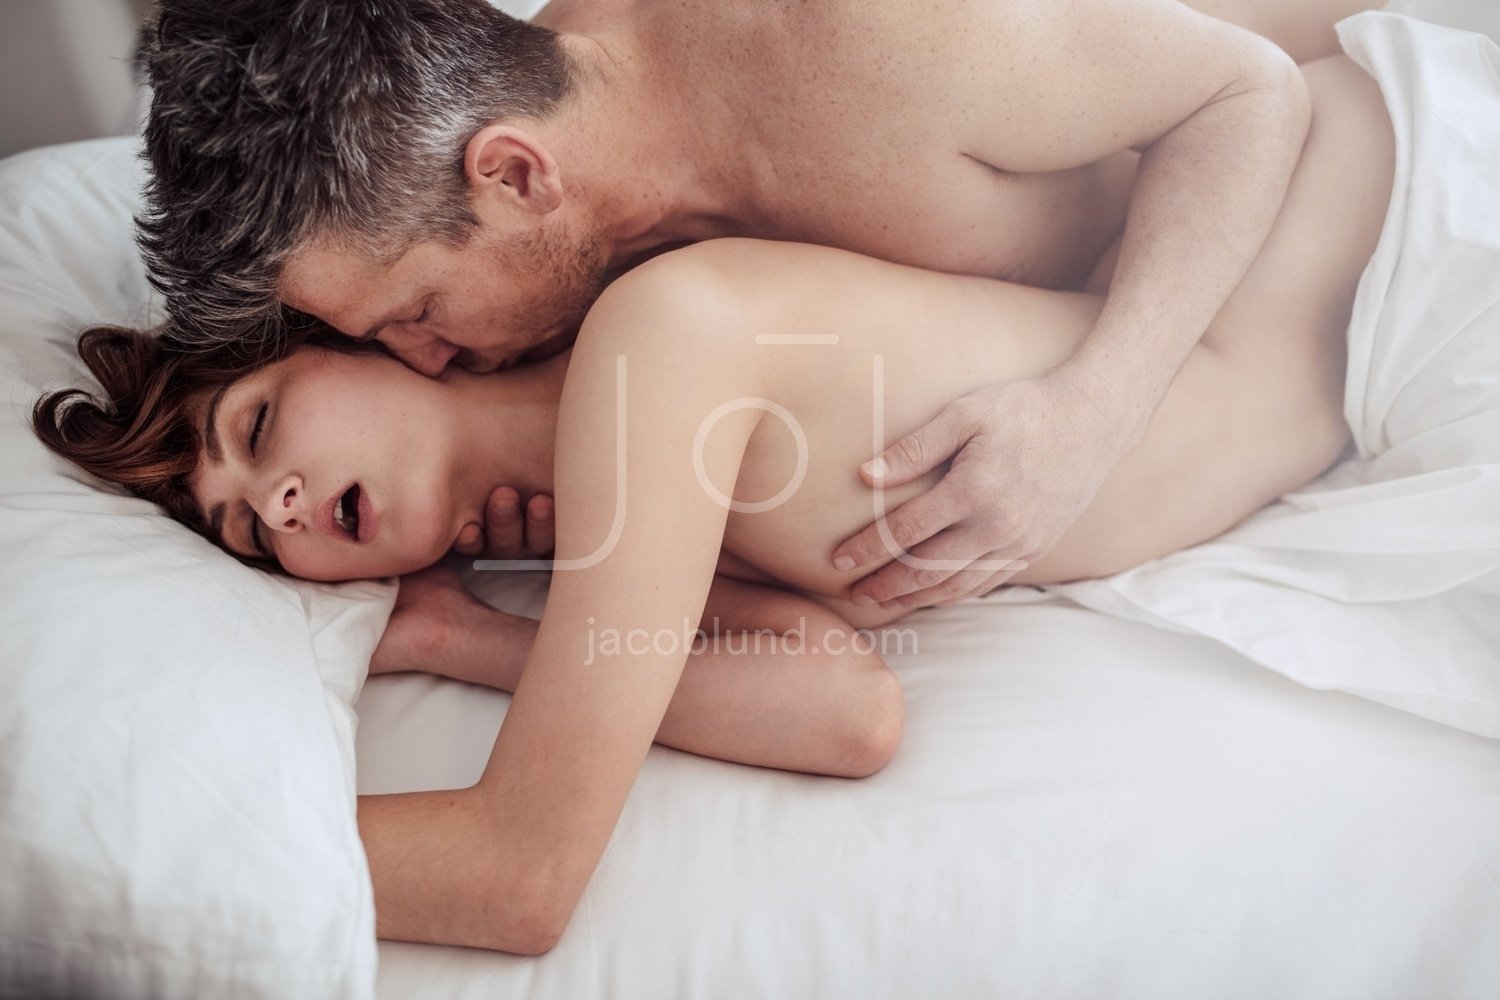 husband wife sex in bedroom Adult Pics Hq